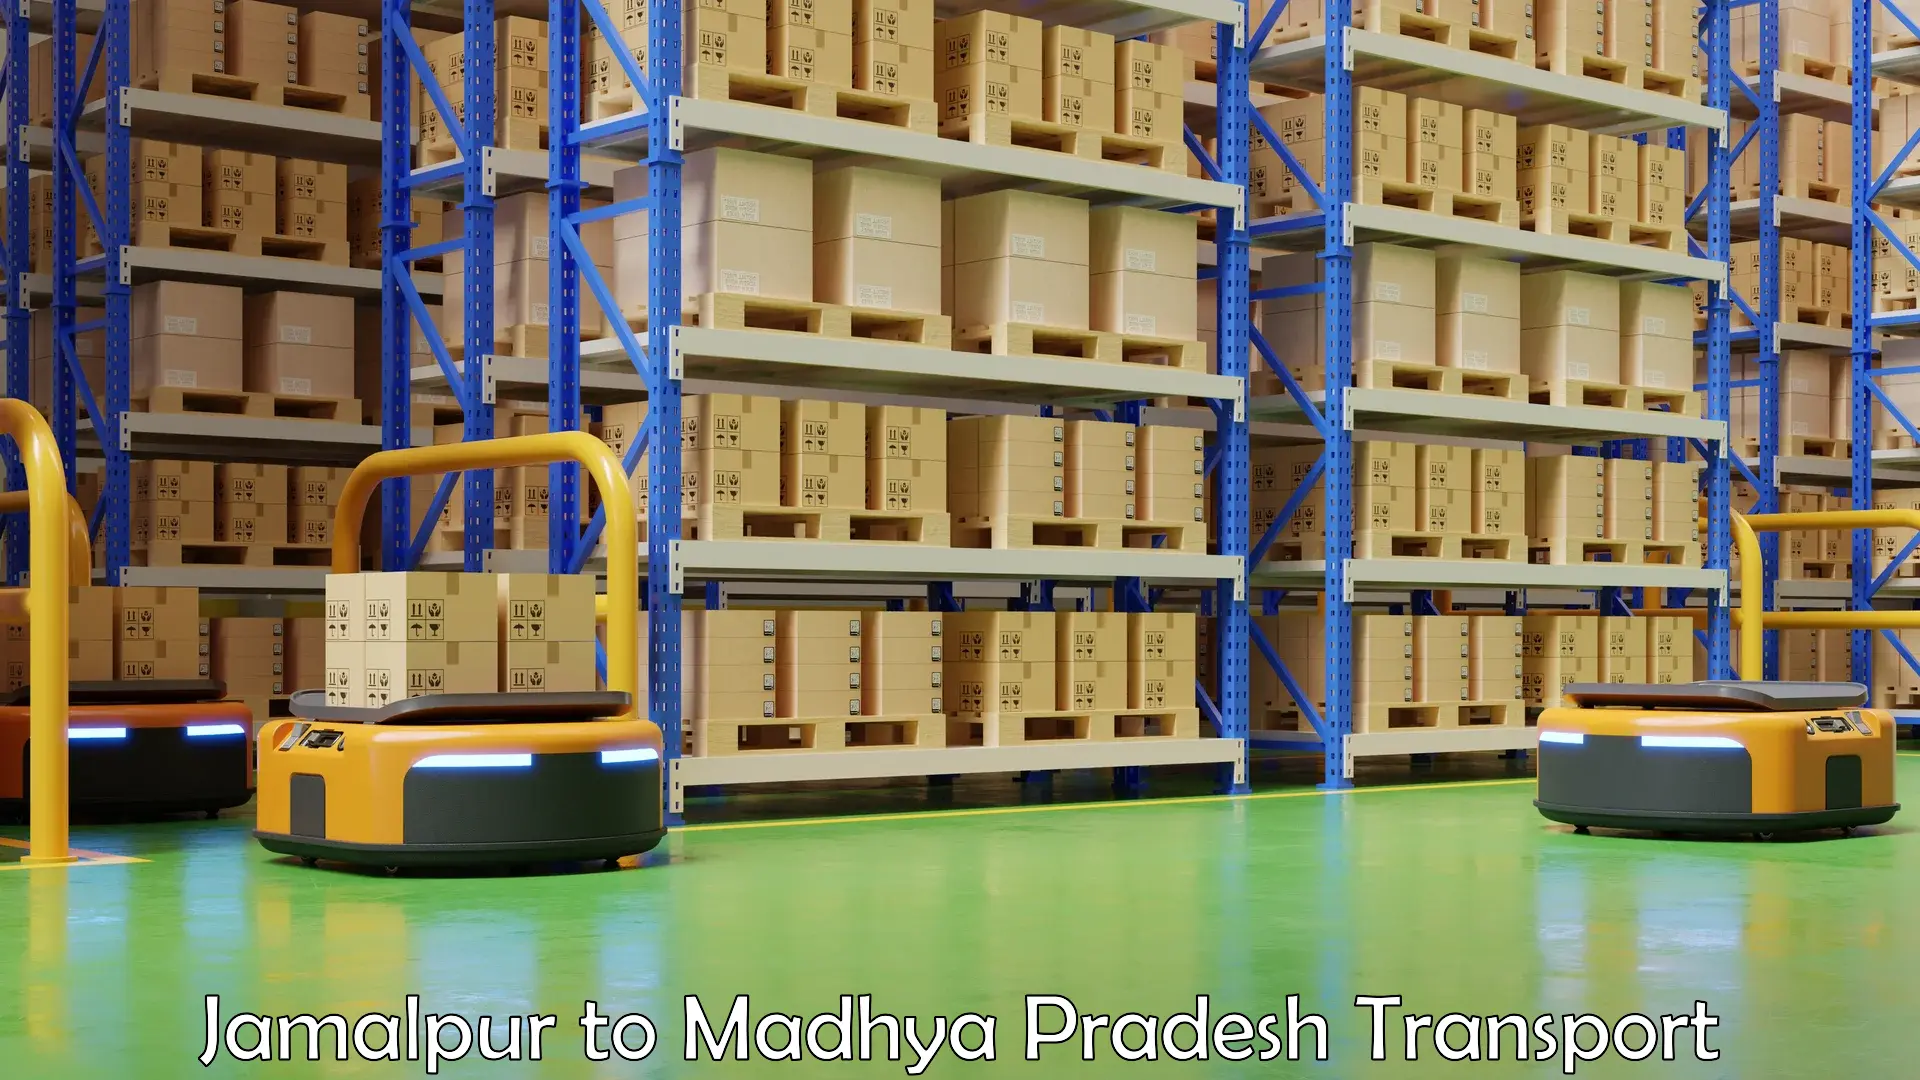 Truck transport companies in India Jamalpur to Madwas